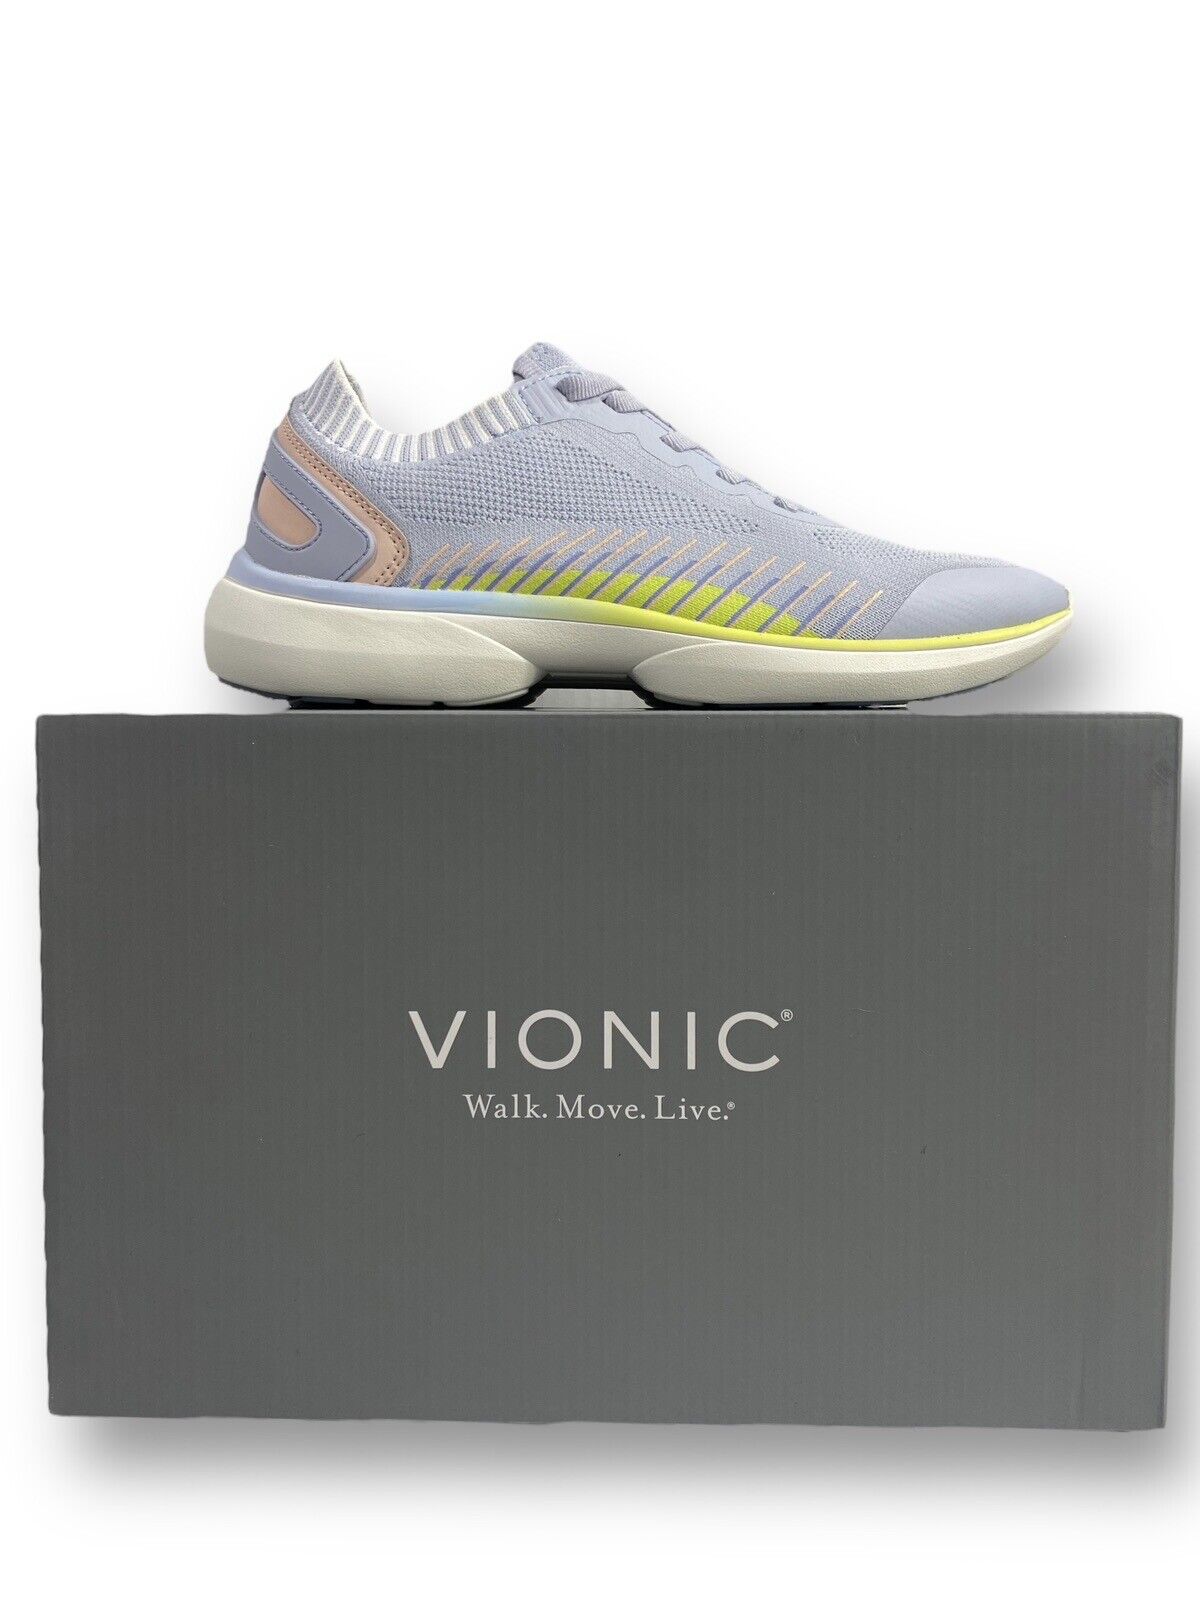 NEW Vionic Women\'s EMBOLDEN Knit Orthotic Walking Sneakers Shoes SZ 8 Blue Haze